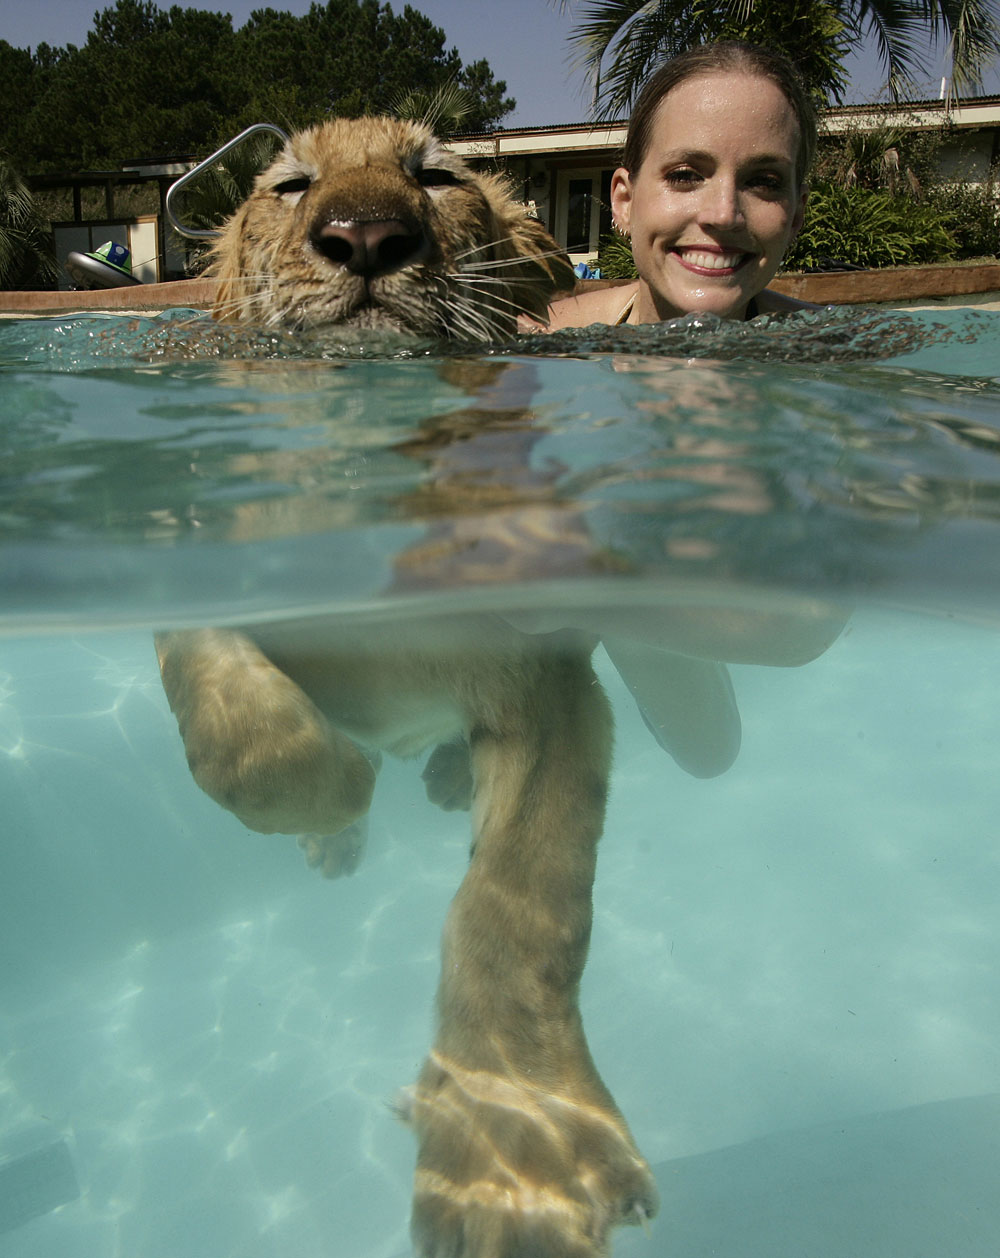 Animal trainers in bikinis swim with tigers: Viewing Photo 